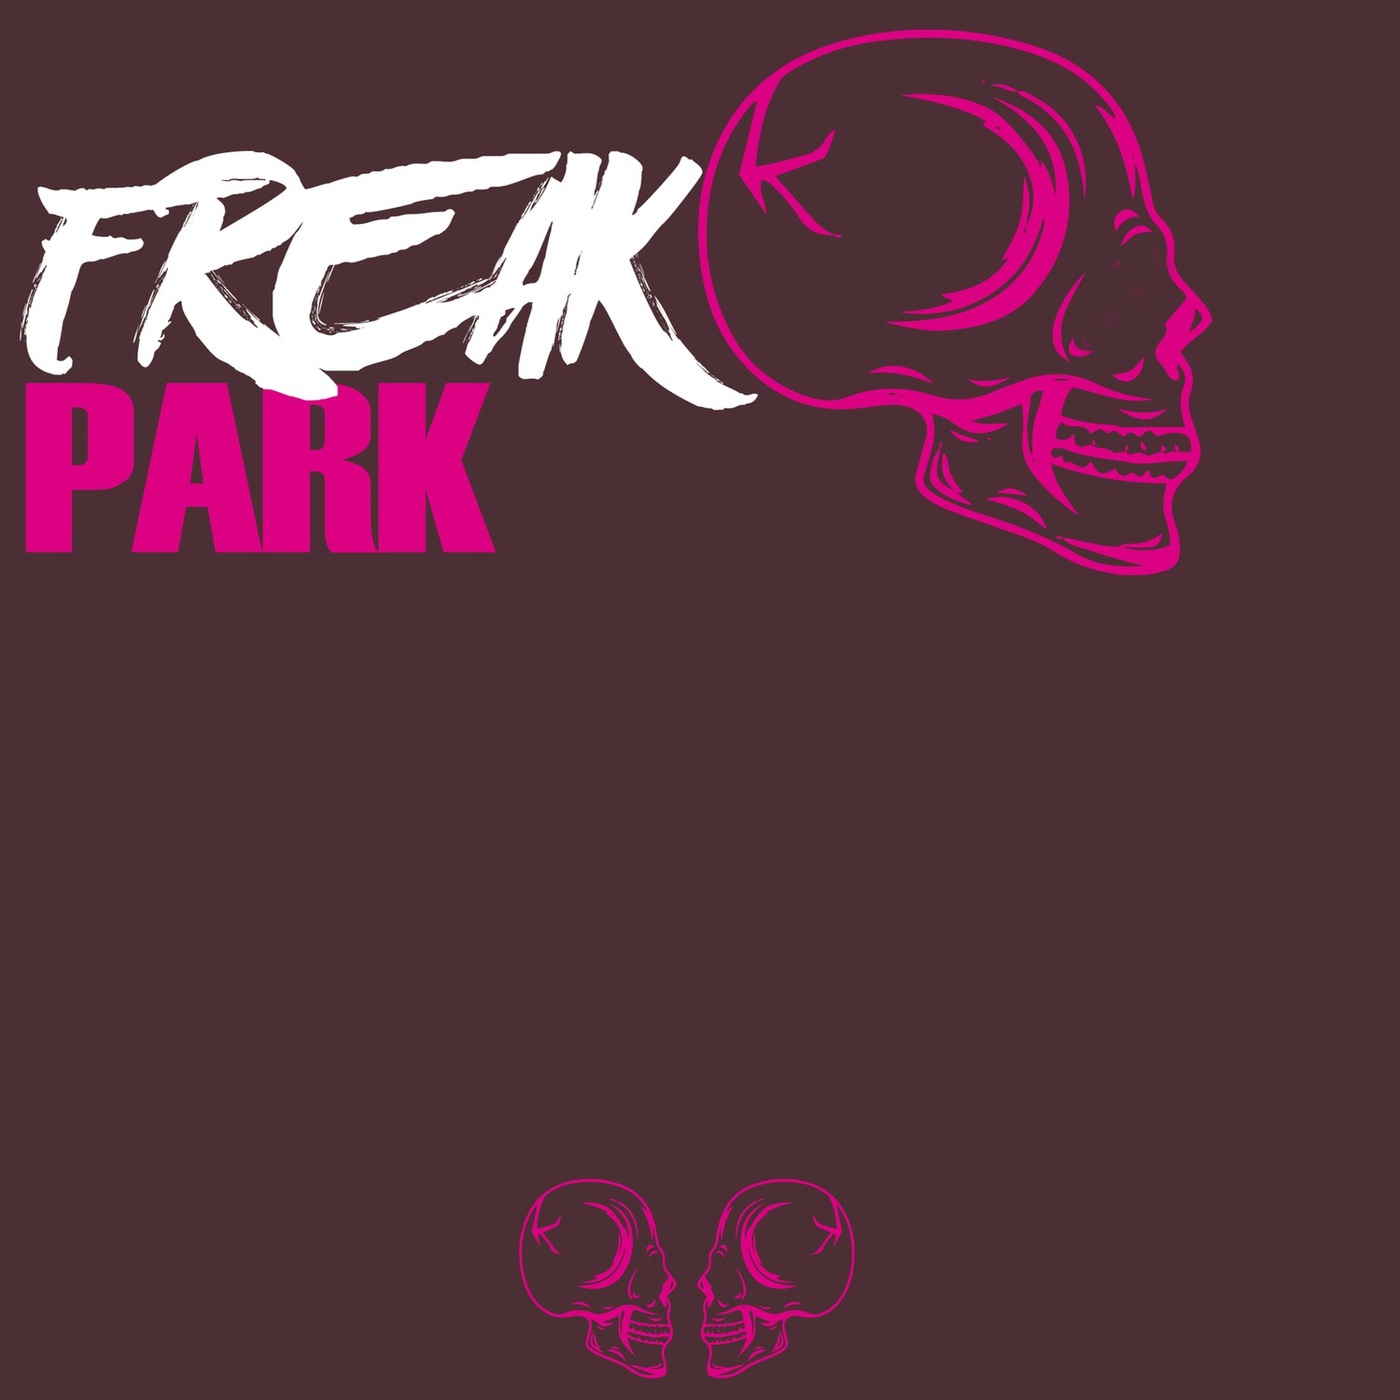 Three D Fusion - House Nation / Radio Paskal / Freak Park